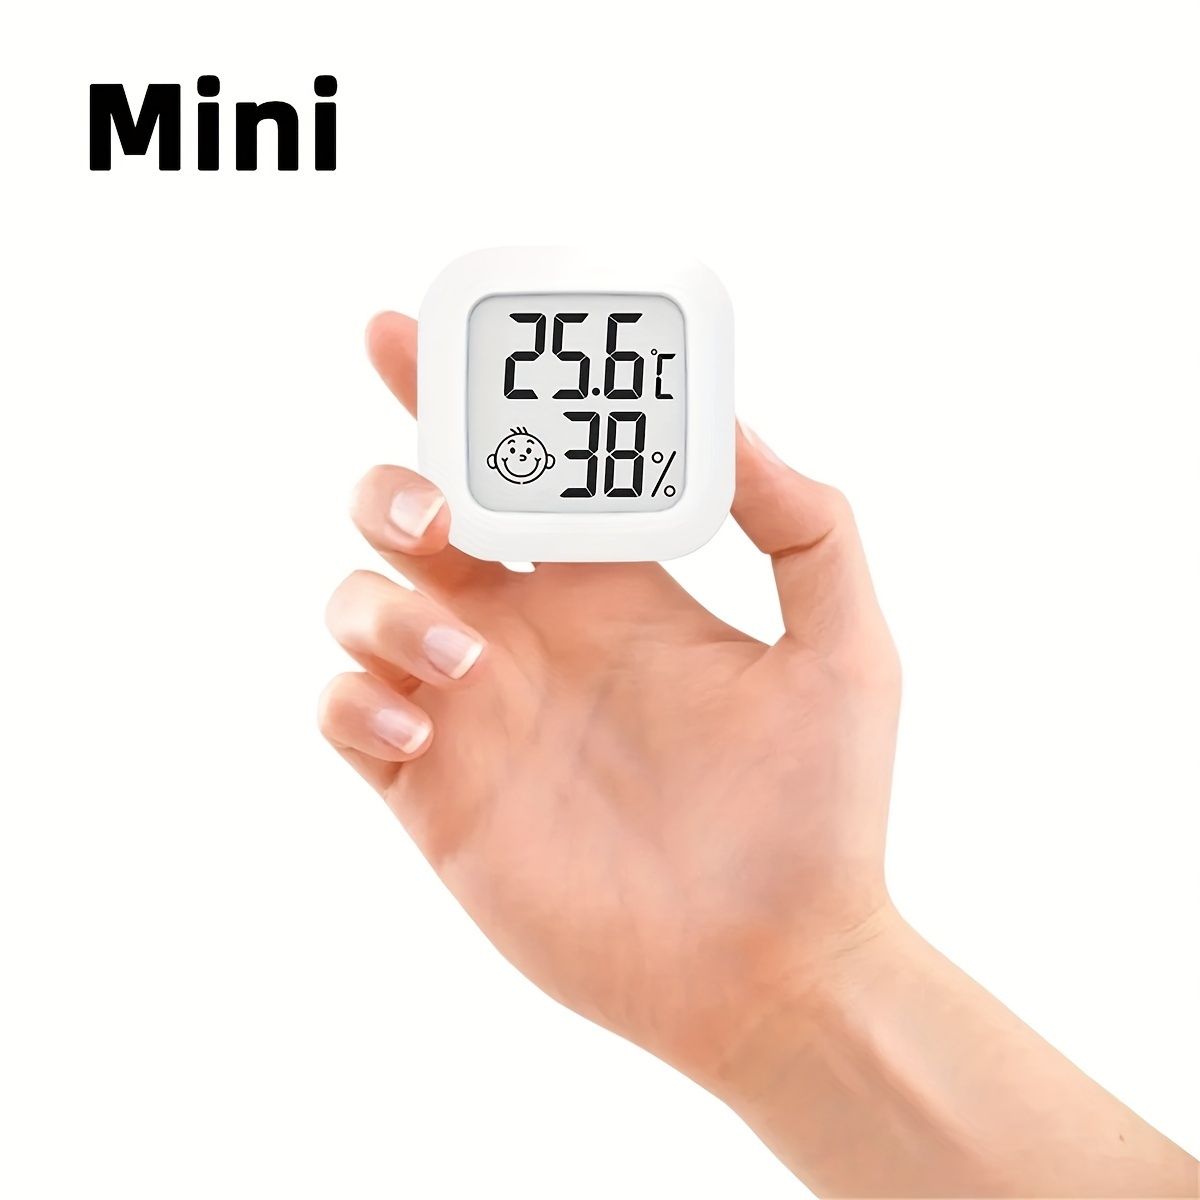 5X Thermometre Interieur Maison Hygrometre, Mini Thermometre